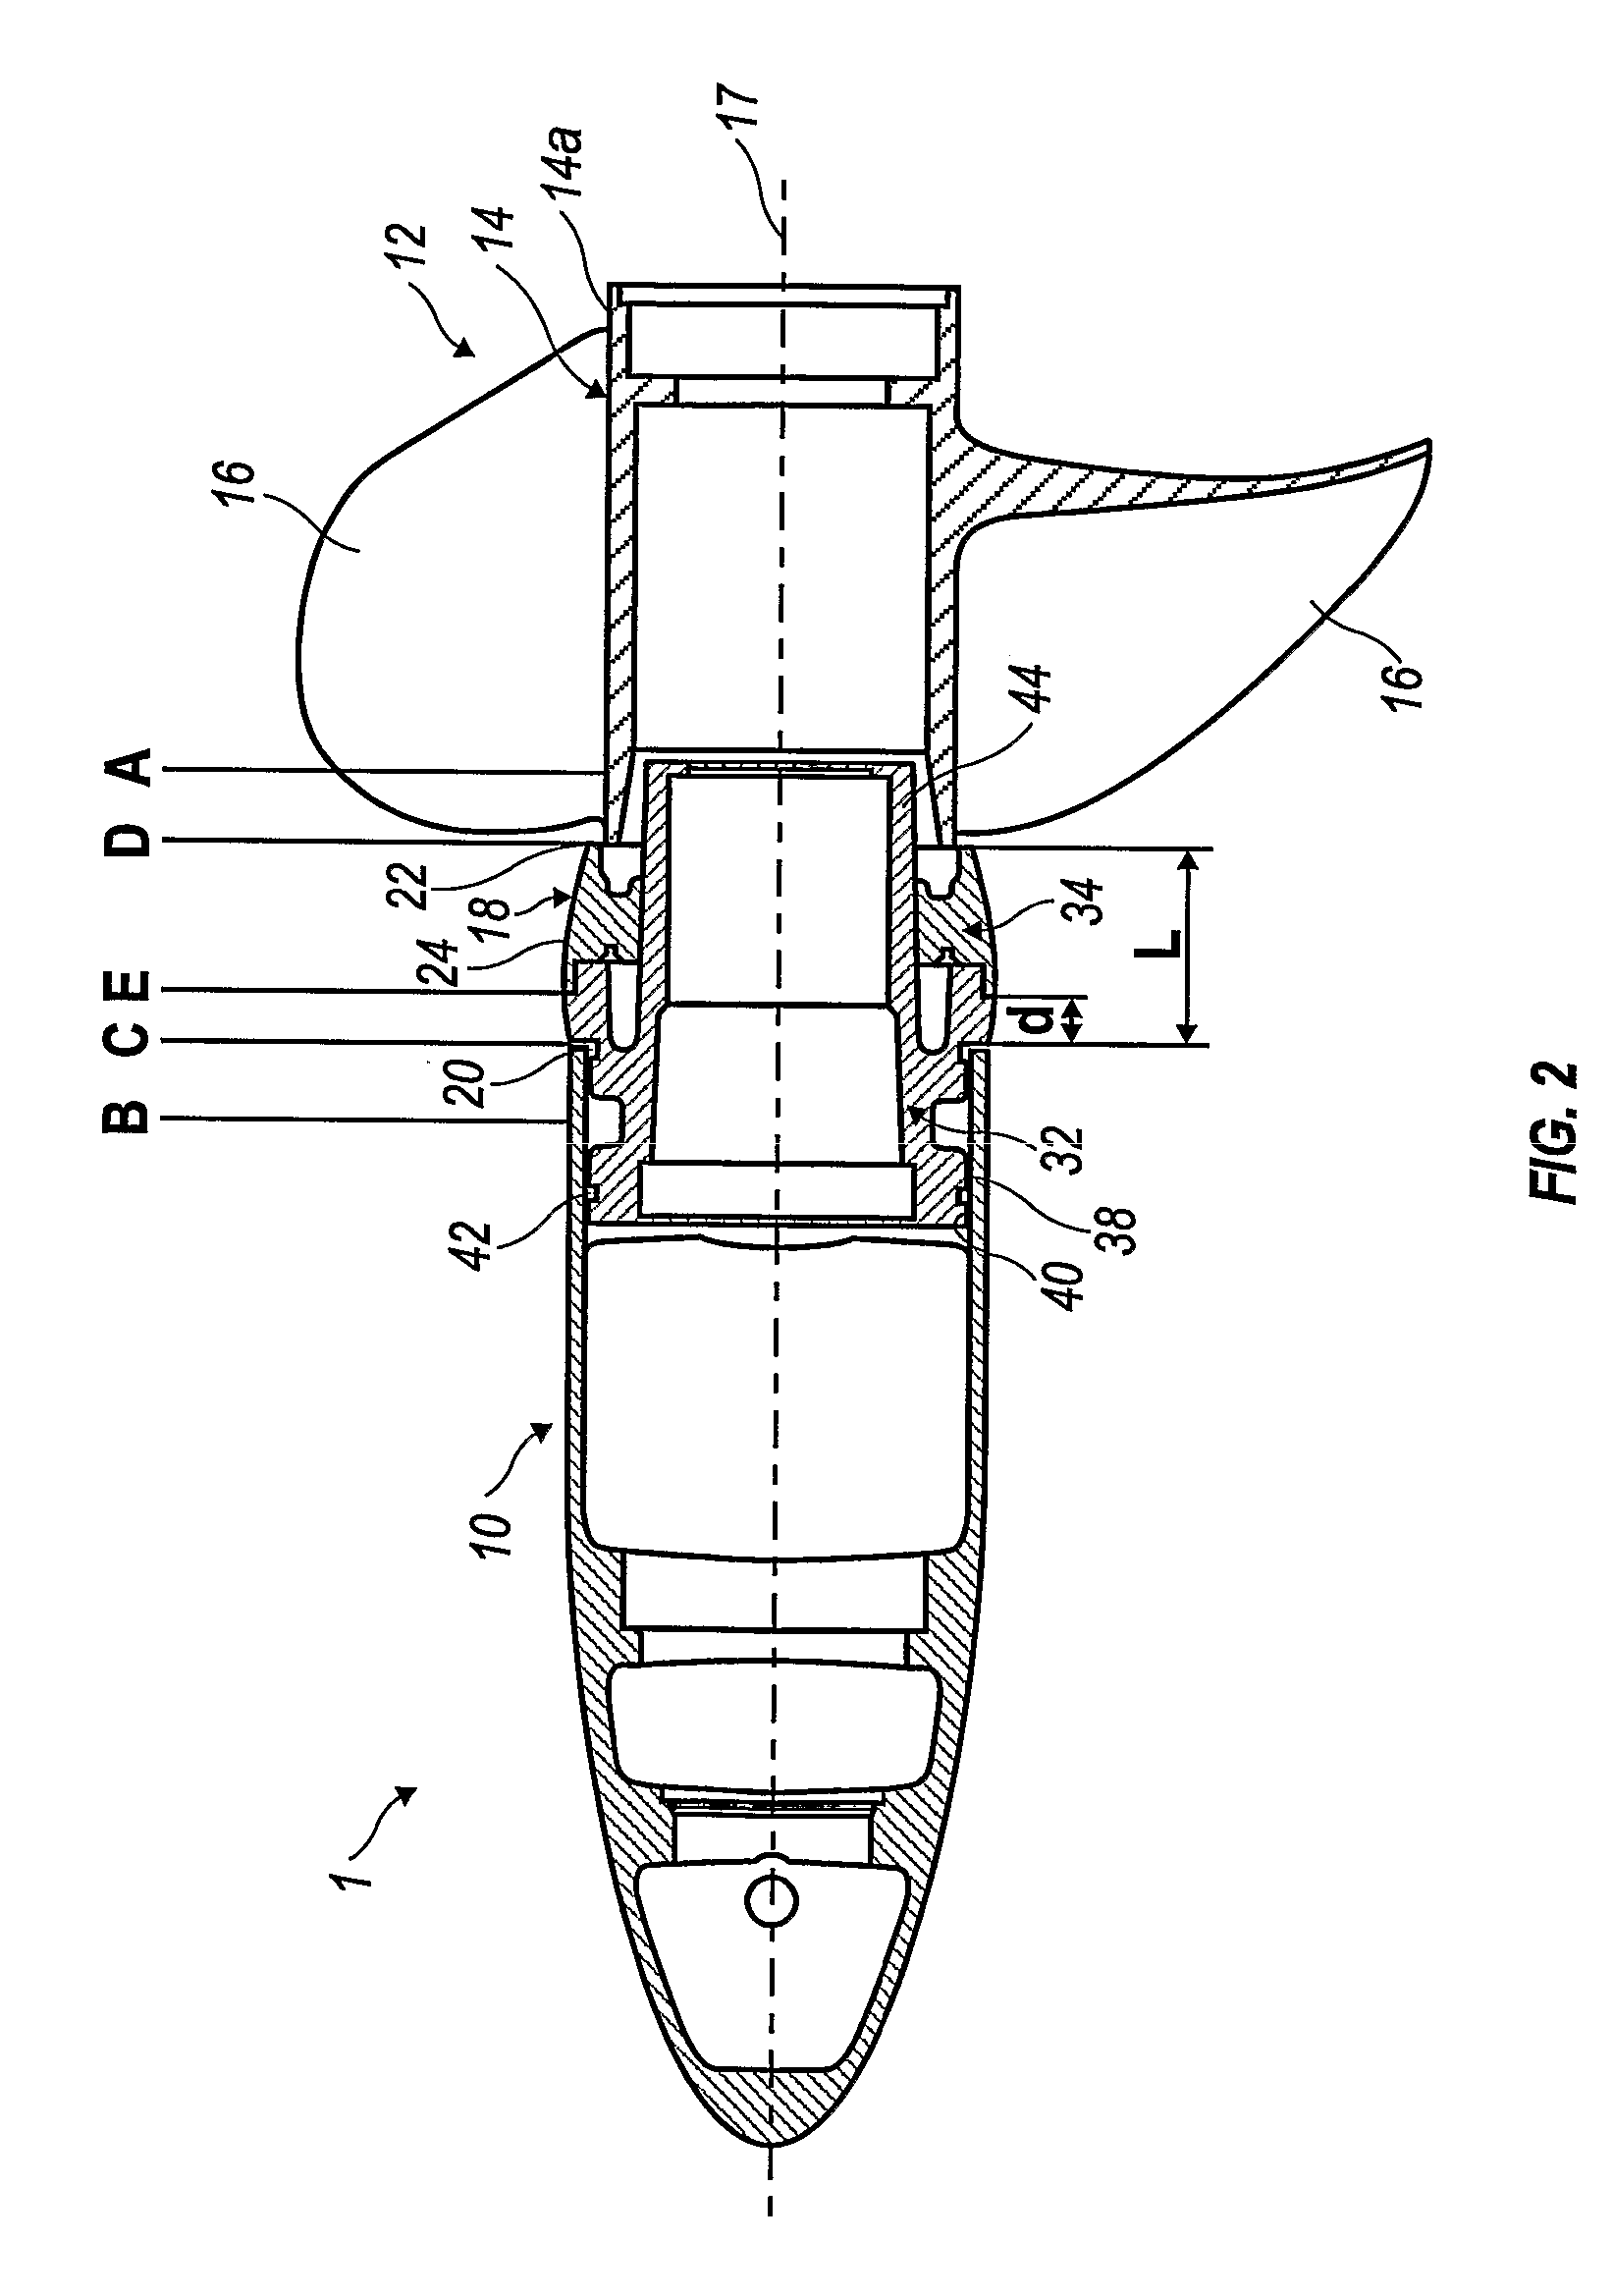 Marine propeller drive